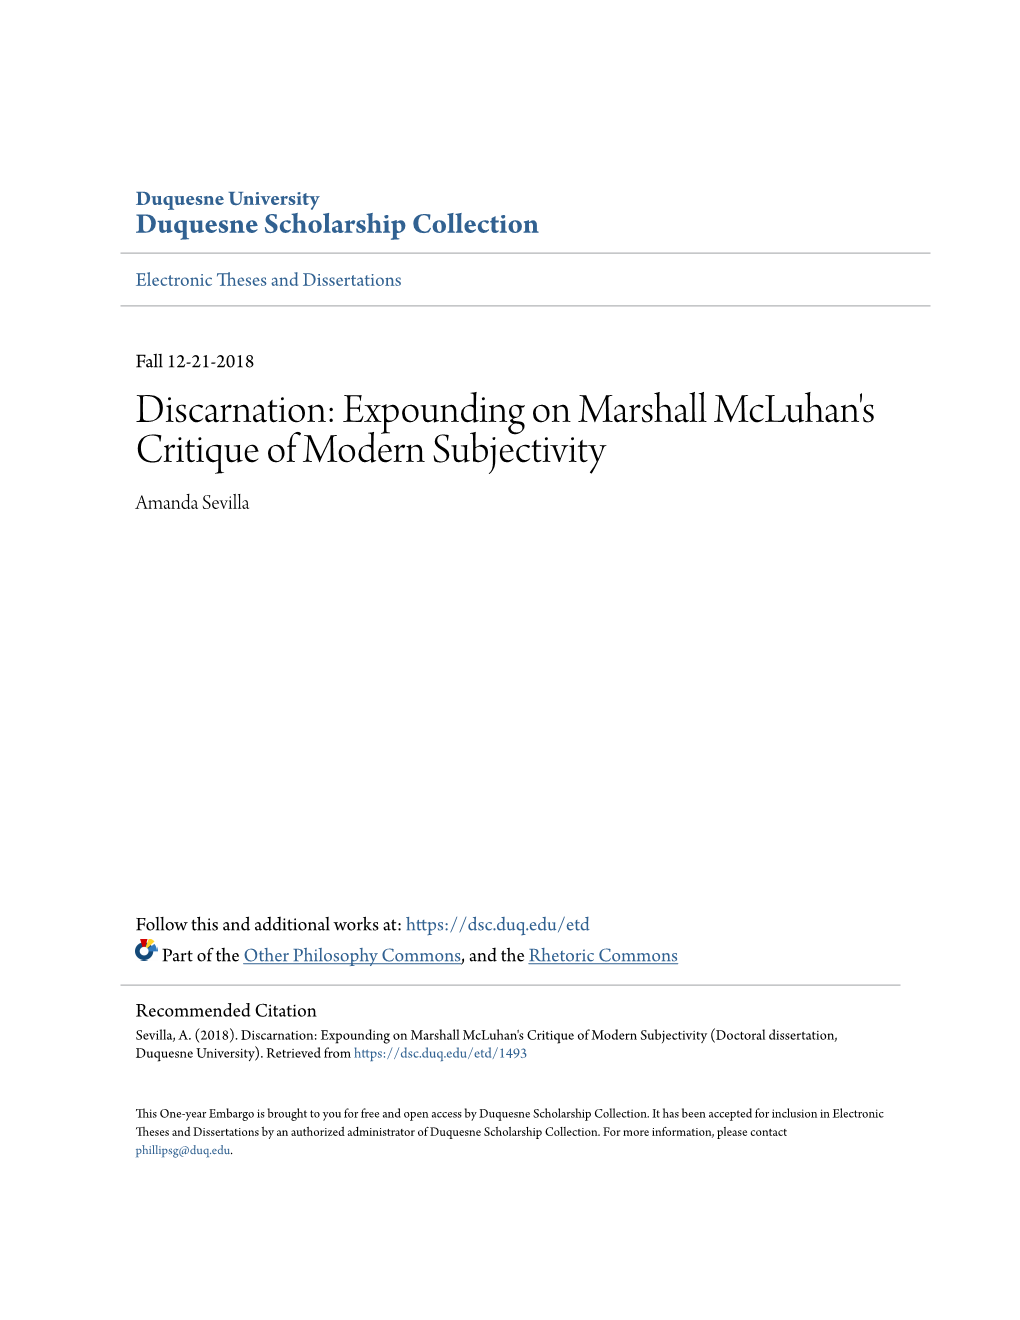 Discarnation: Expounding on Marshall Mcluhan's Critique of Modern Subjectivity Amanda Sevilla